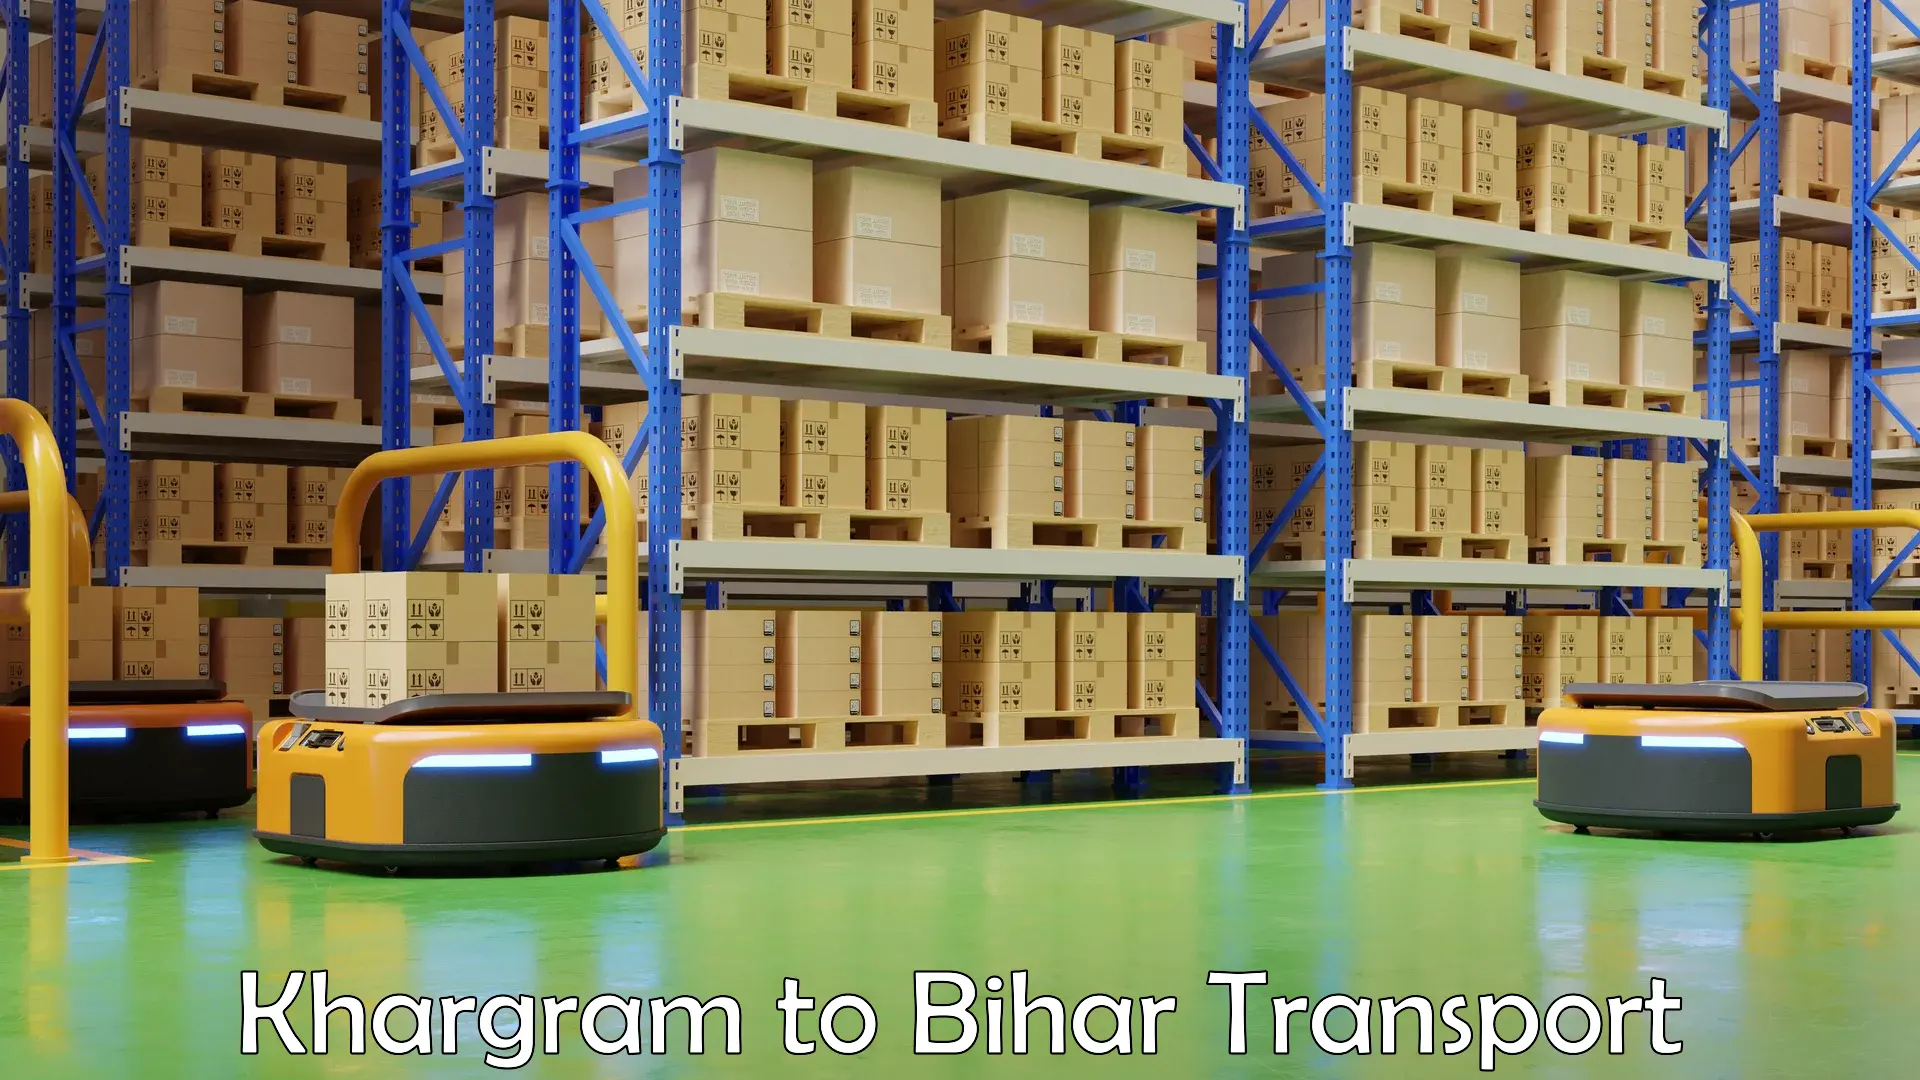 Truck transport companies in India Khargram to Bhorey